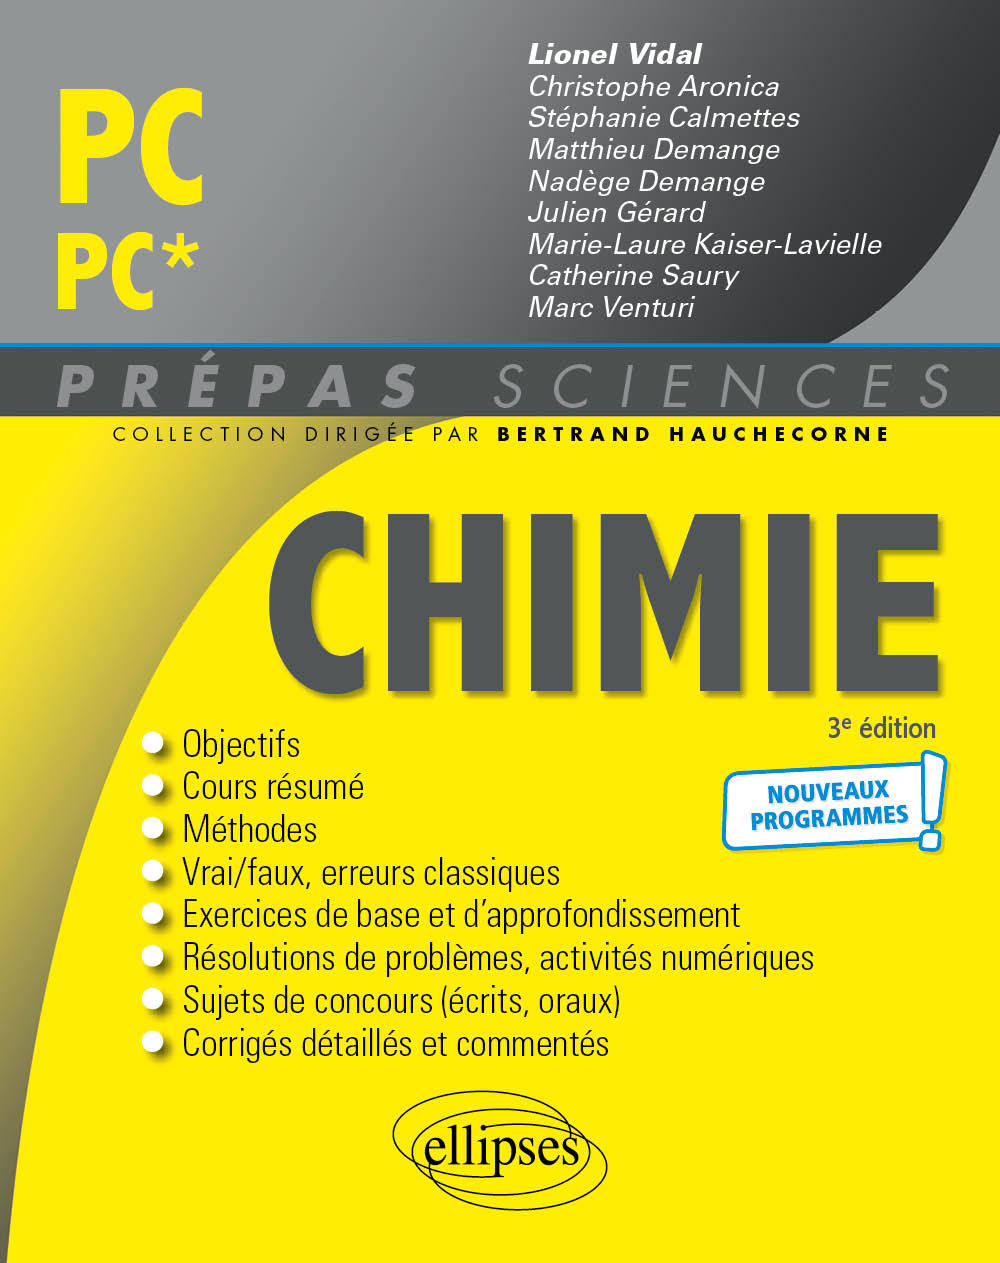 Kniha Chimie PC/PC* - Programme 2022 Vidal